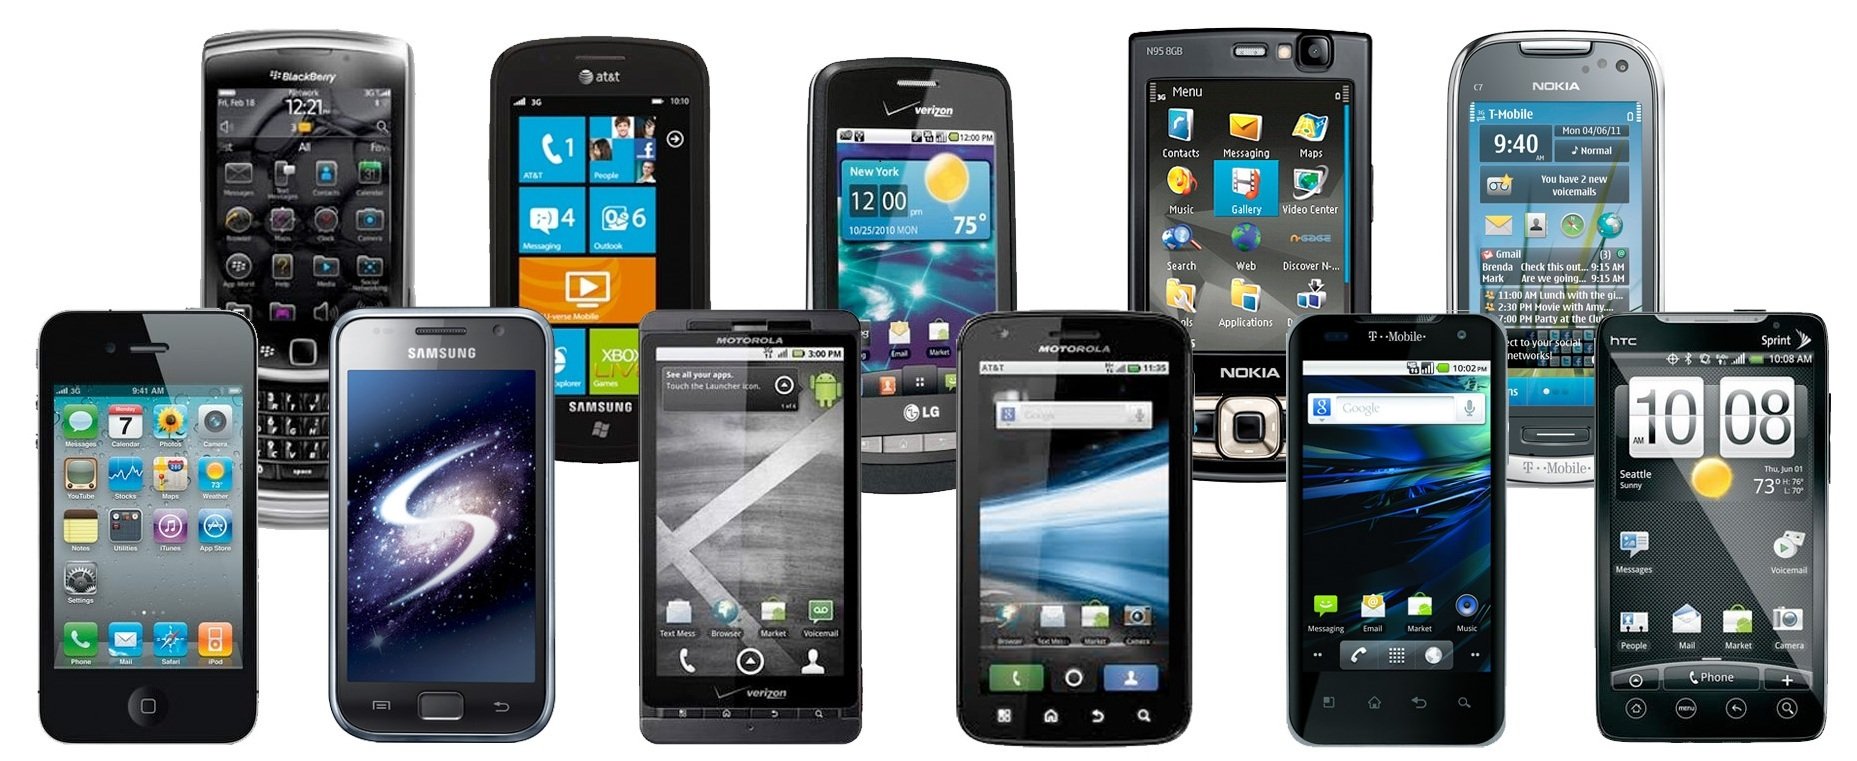 Home screens of 11 mobile phones.